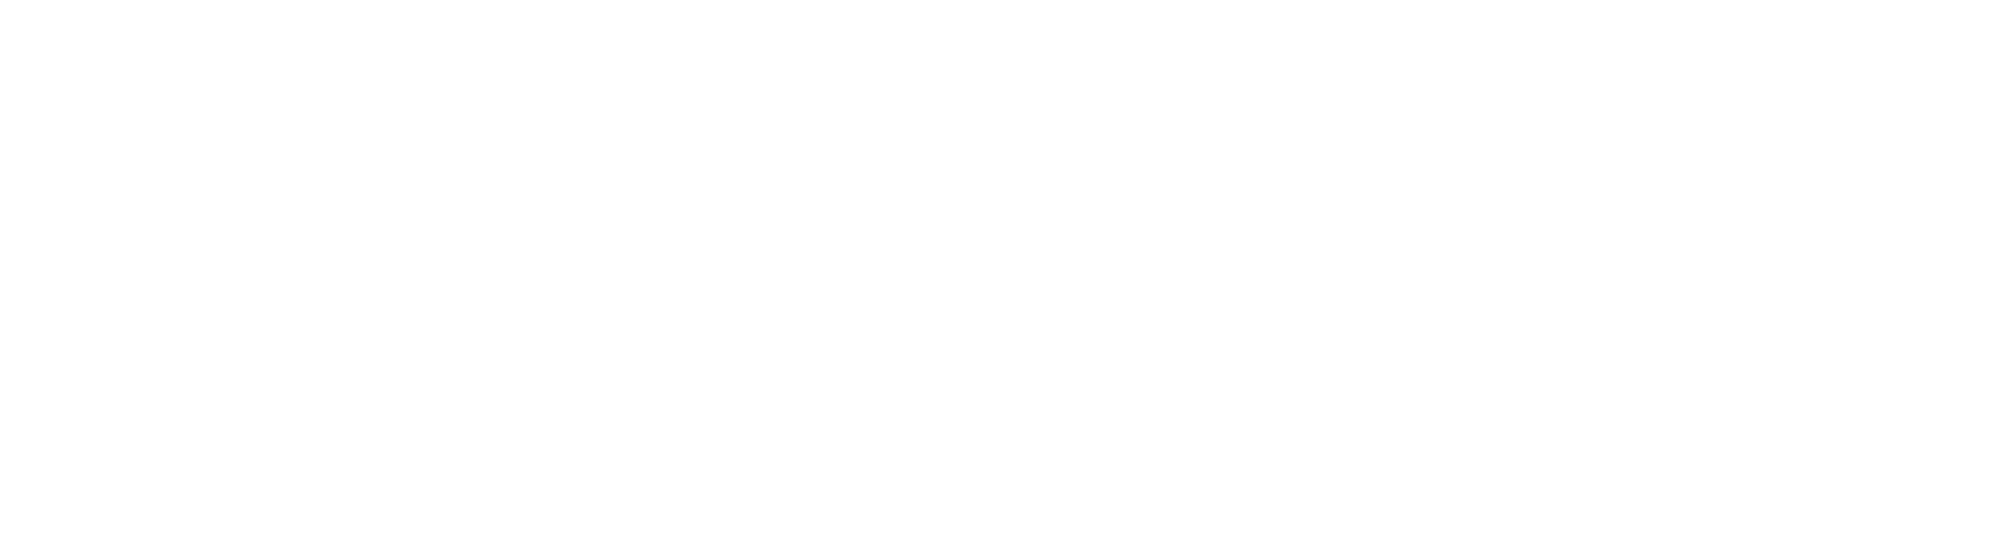 Kiwi Christmas logo